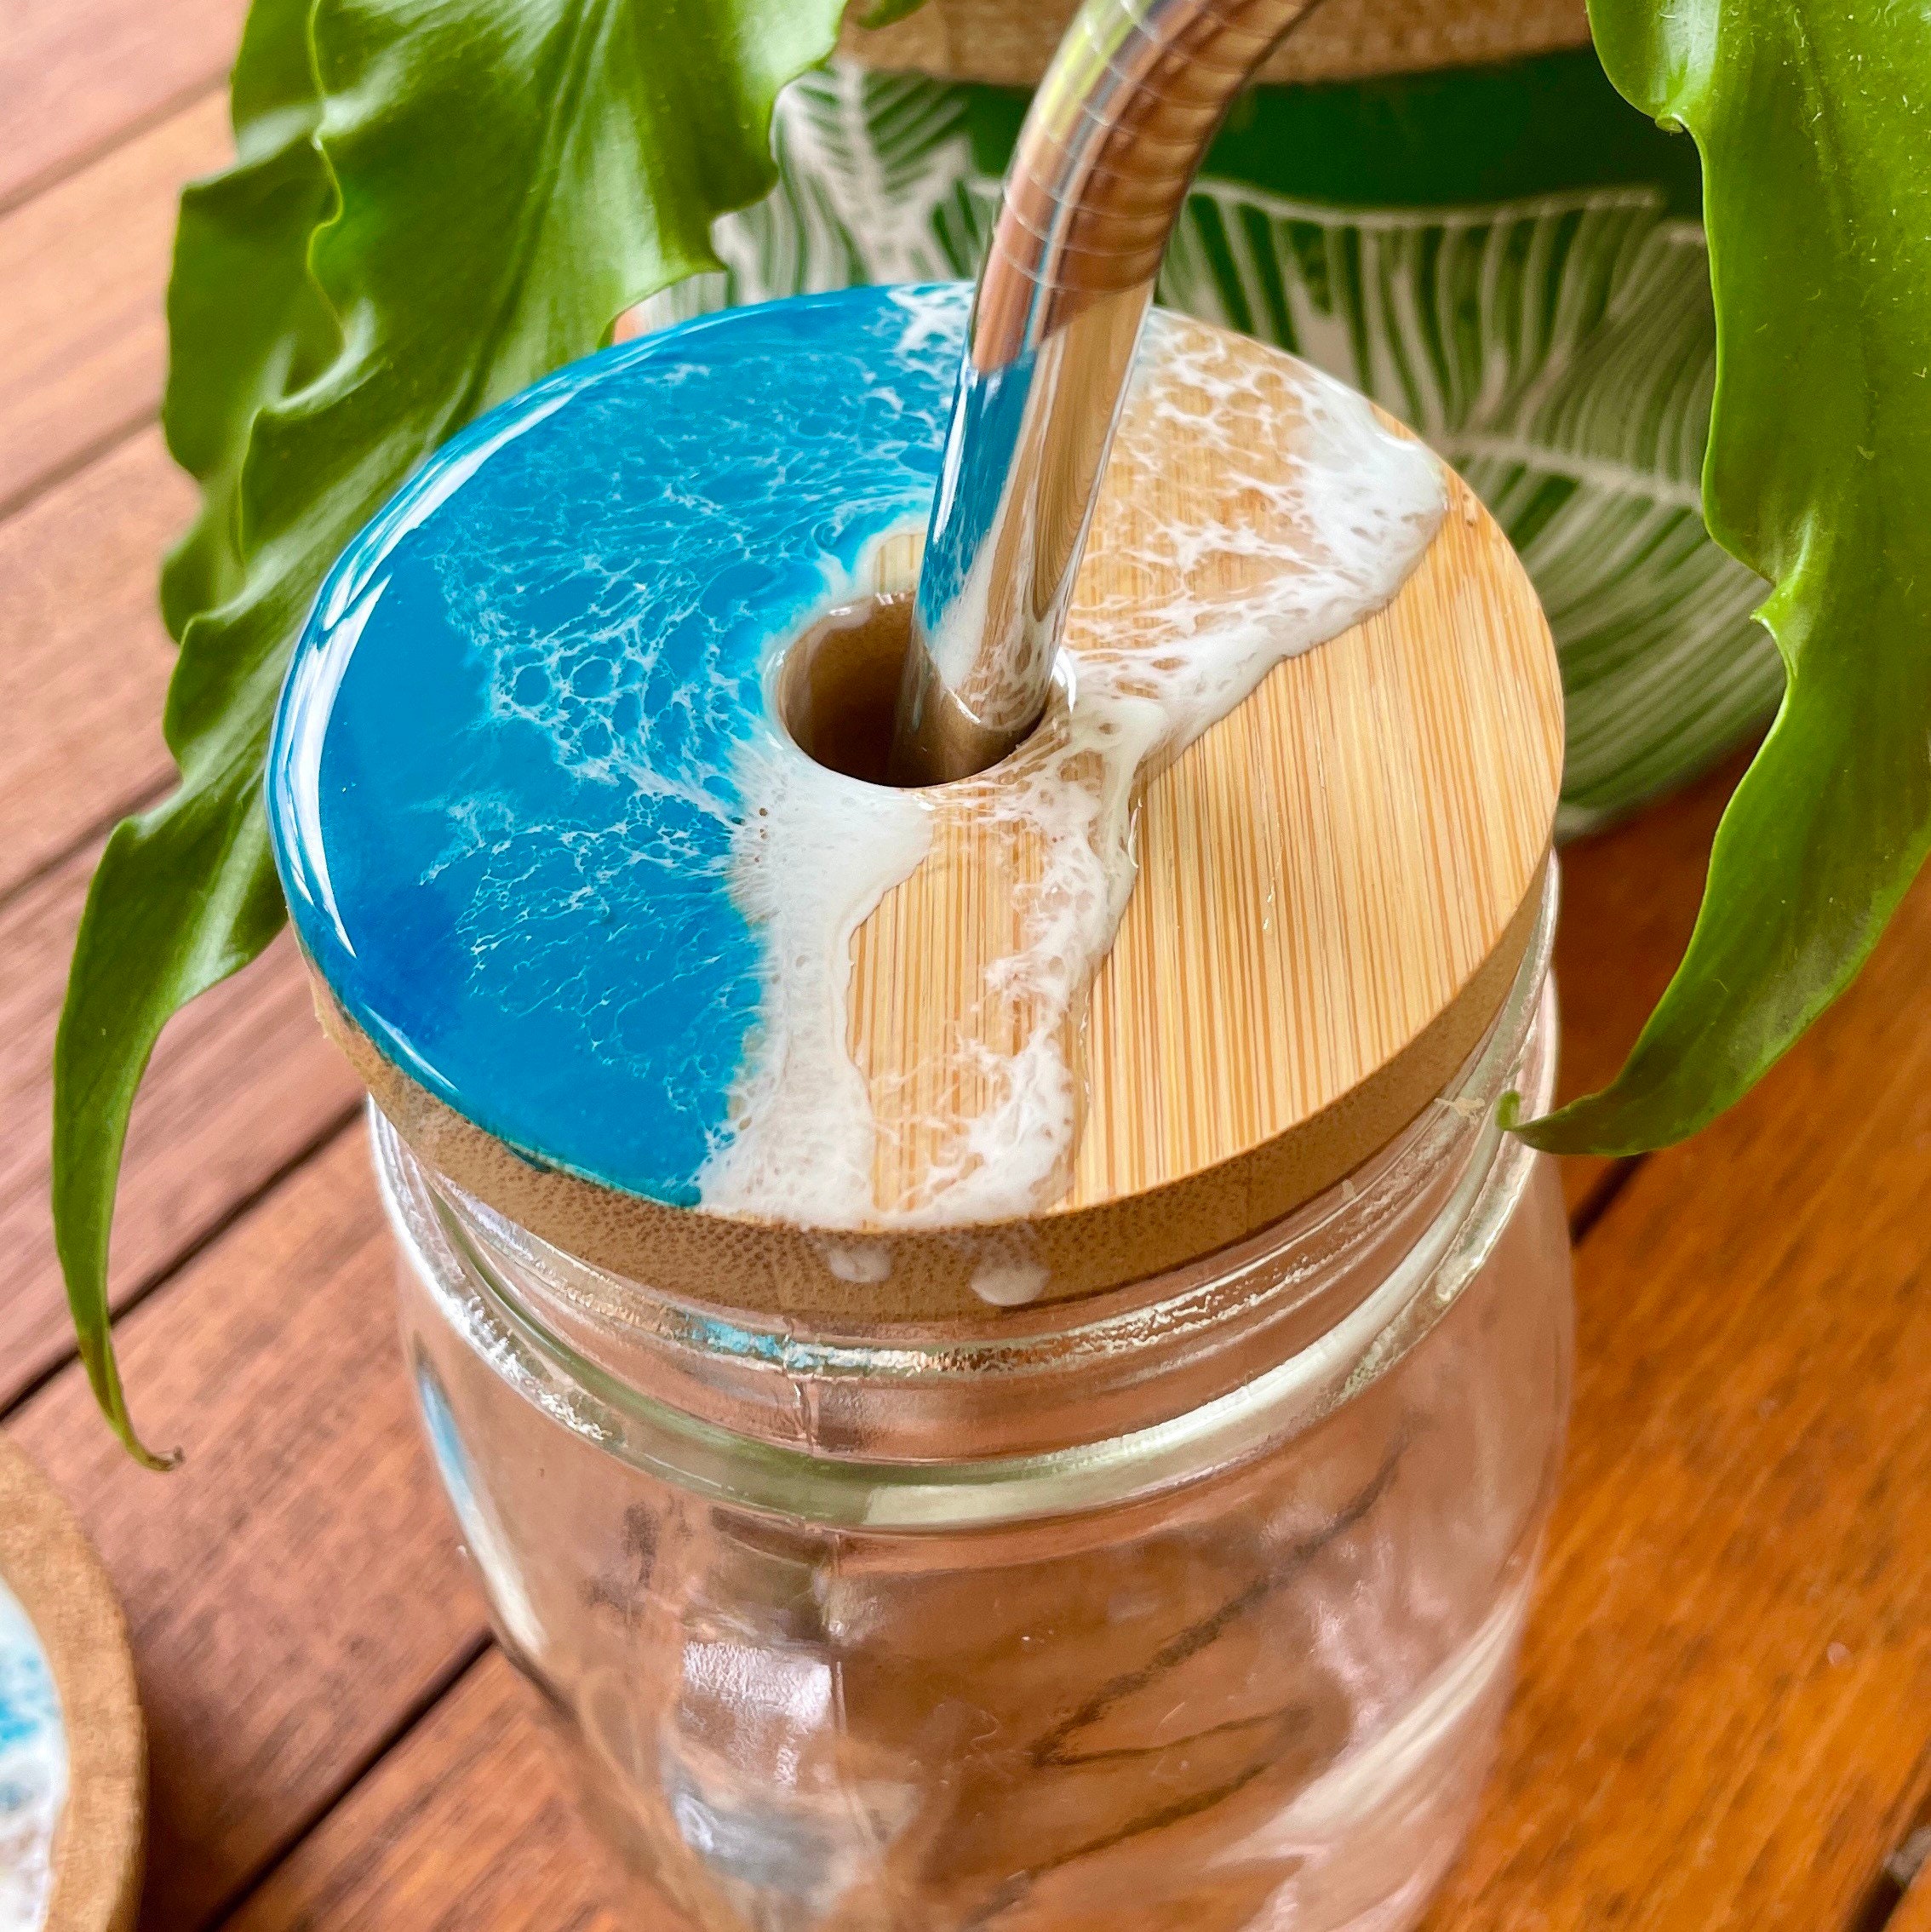 Mason Jars with Handle, Glass Mugs with Straws and Bamboo Lids & Colorful  Airtight Lids 4pcs Set, 16…See more Mason Jars with Handle, Glass Mugs with